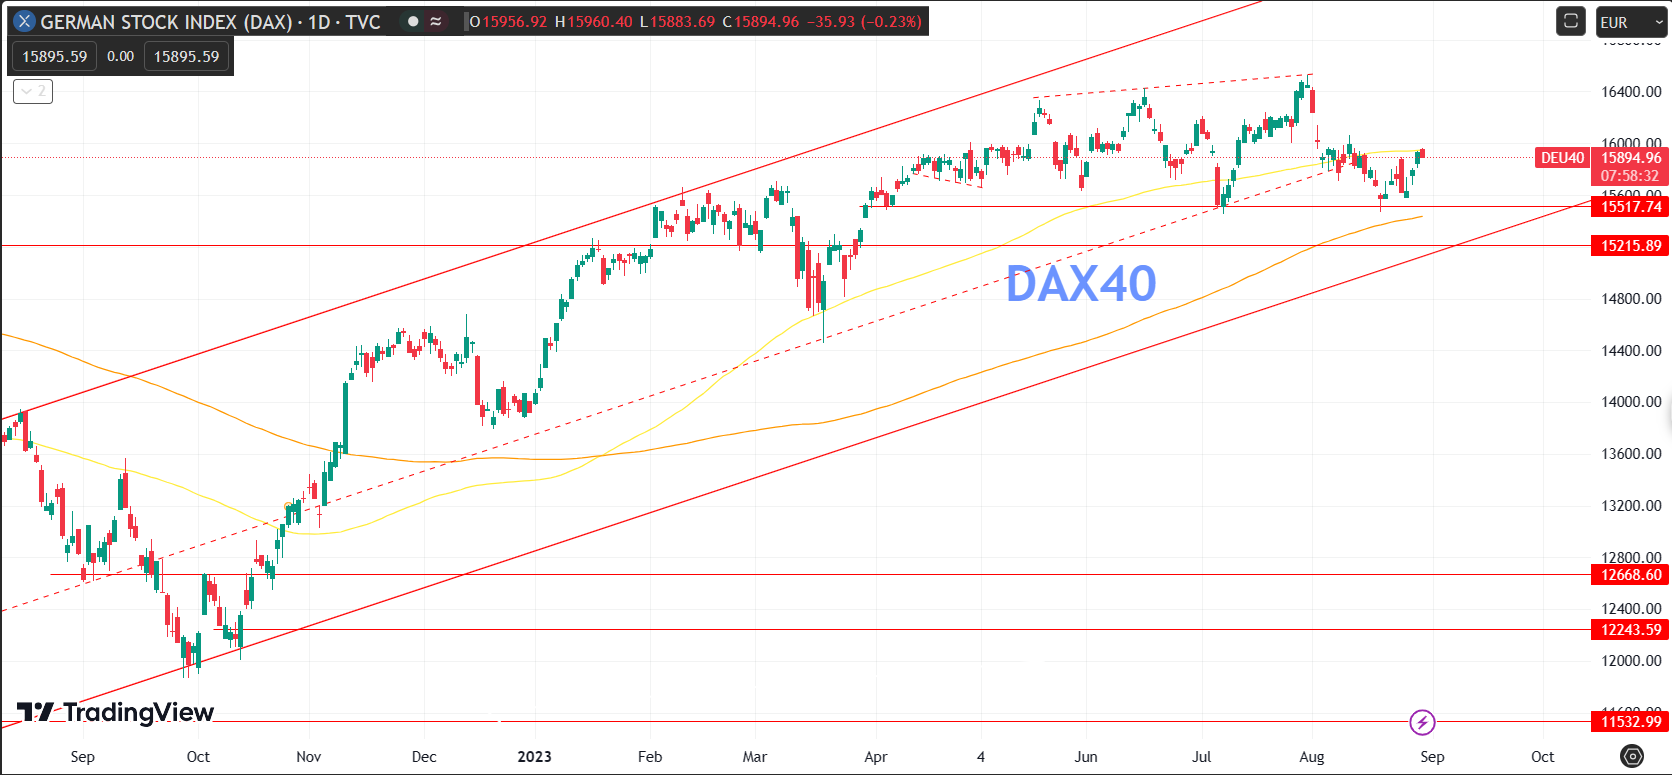 Daily Analysis DAX40 - 30 Aug 2023